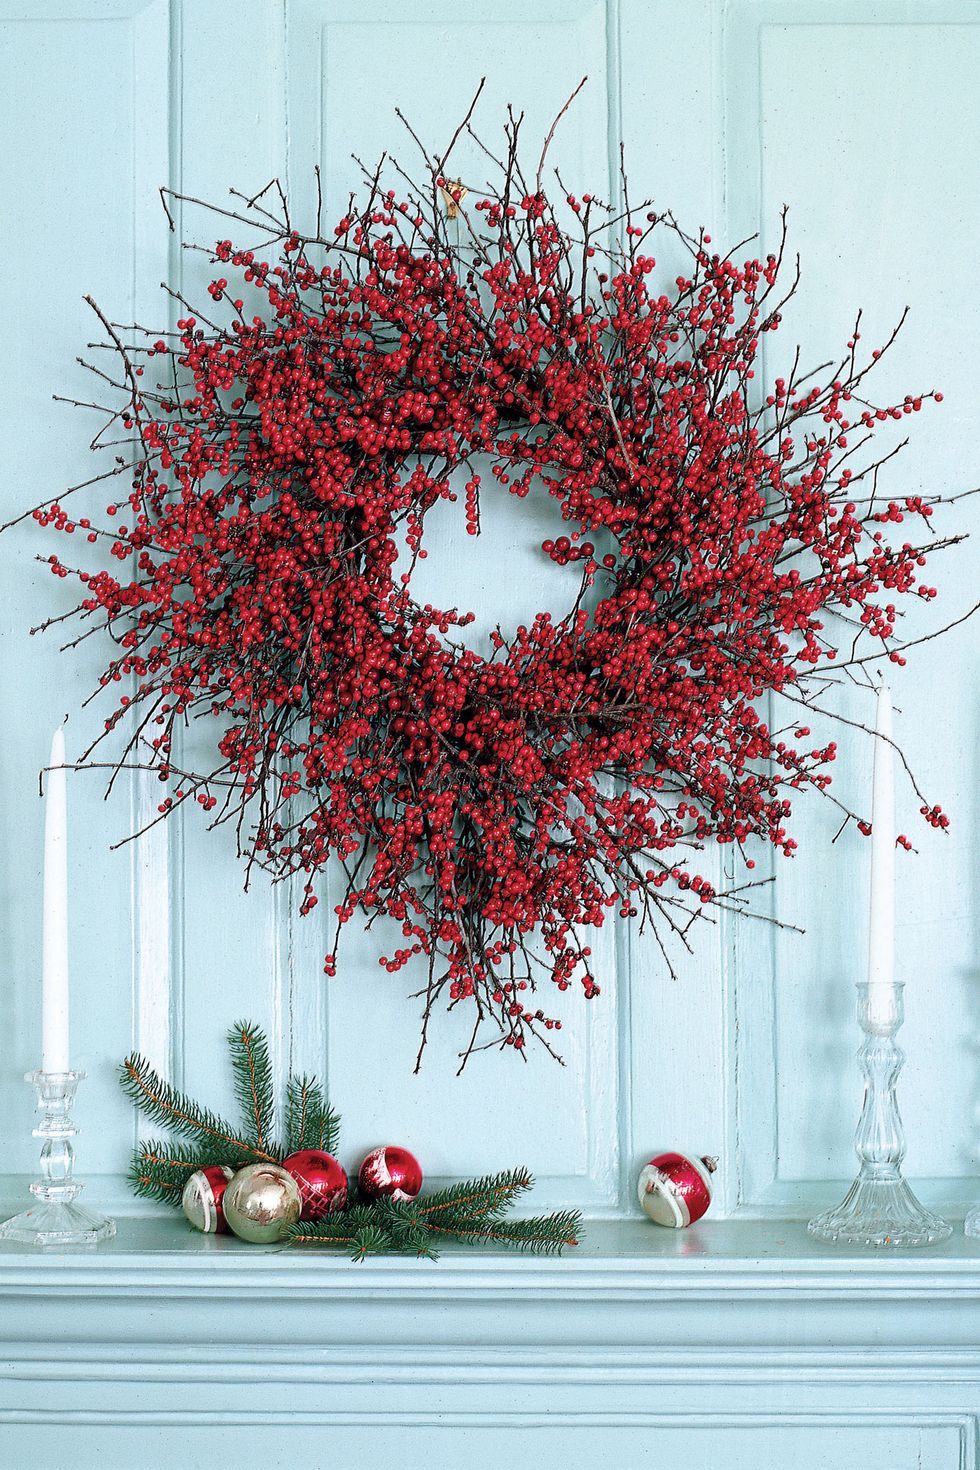 46 DIY Christmas Wreaths - How to Make a Holiday Wreath